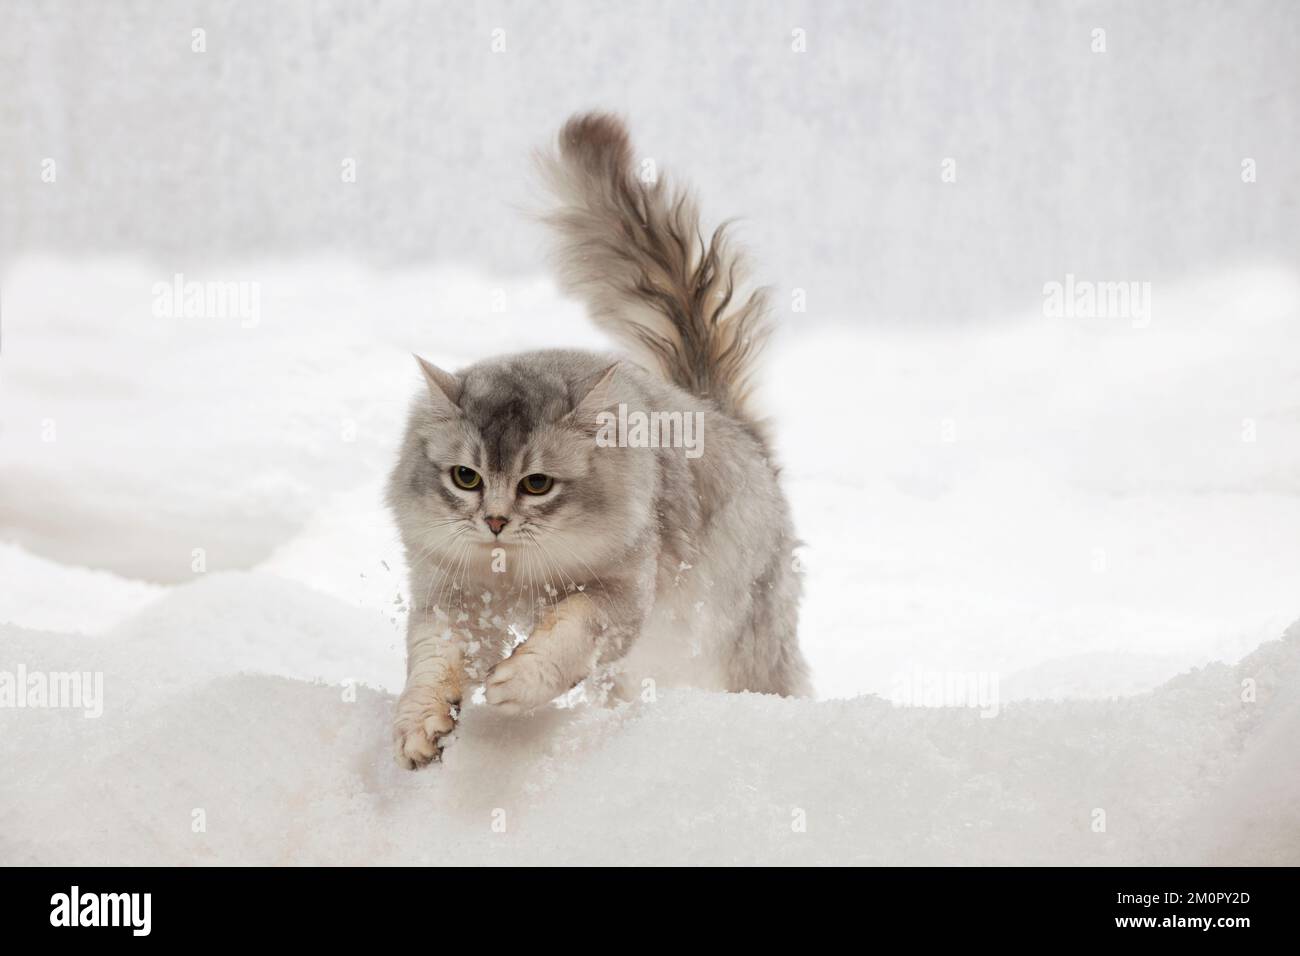 CAT - Tiffanie cat jumping in snow Stock Photo